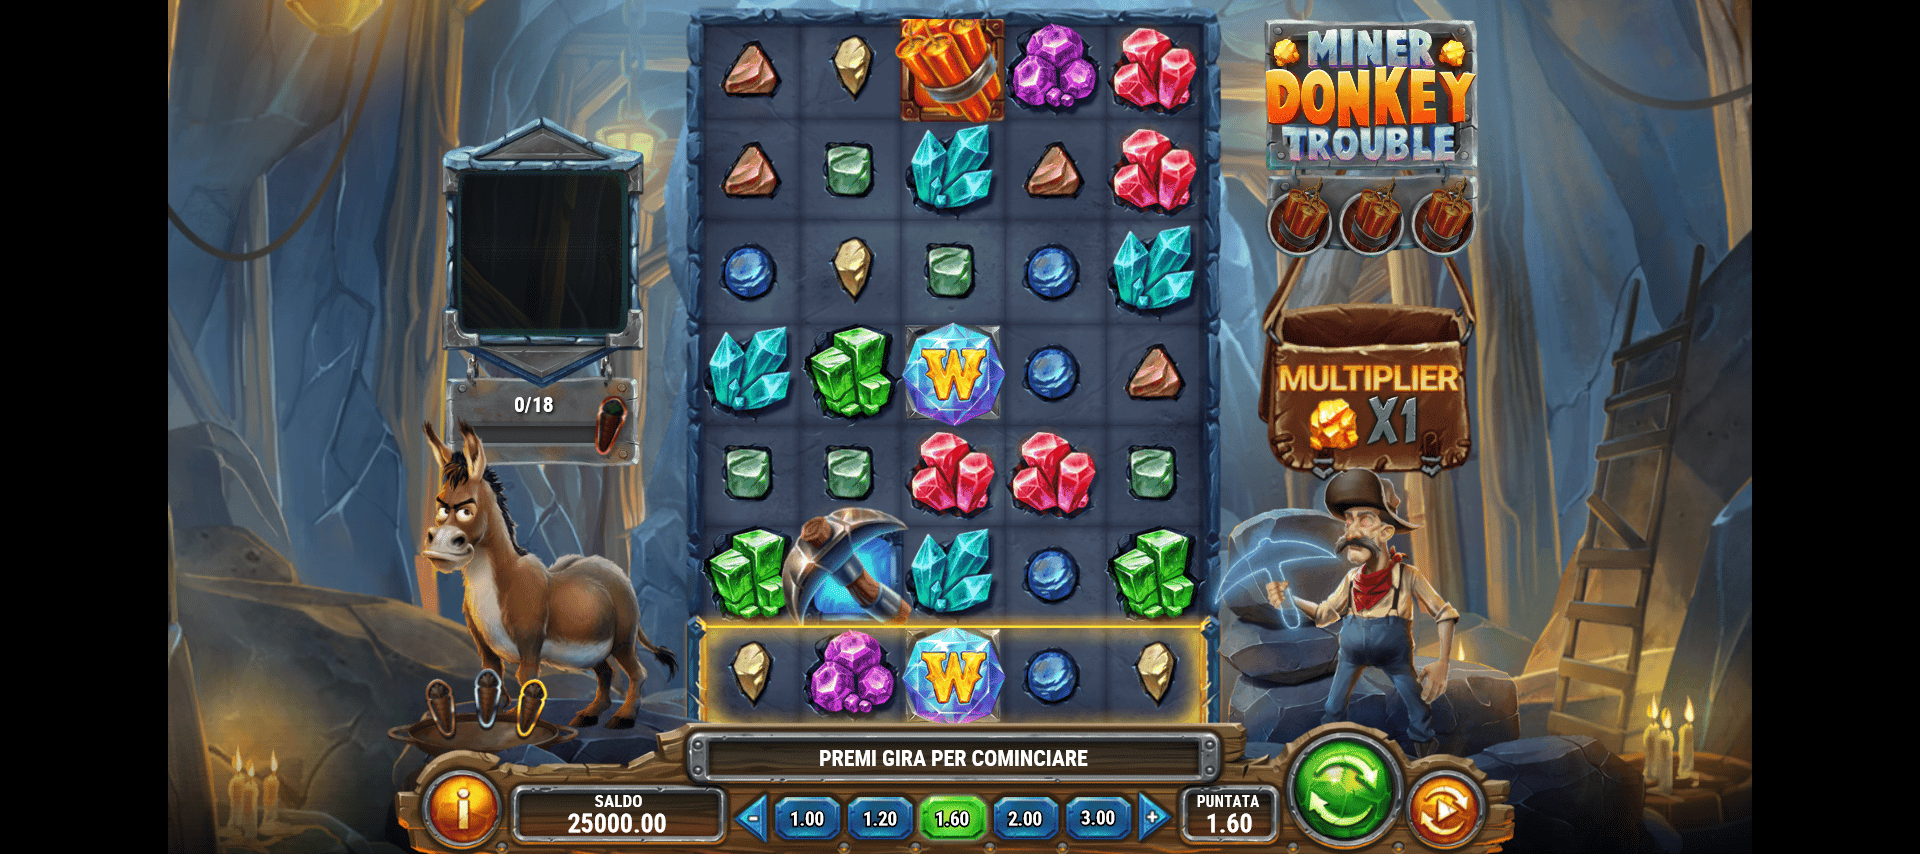 schermata della slot online miner donkey trouble